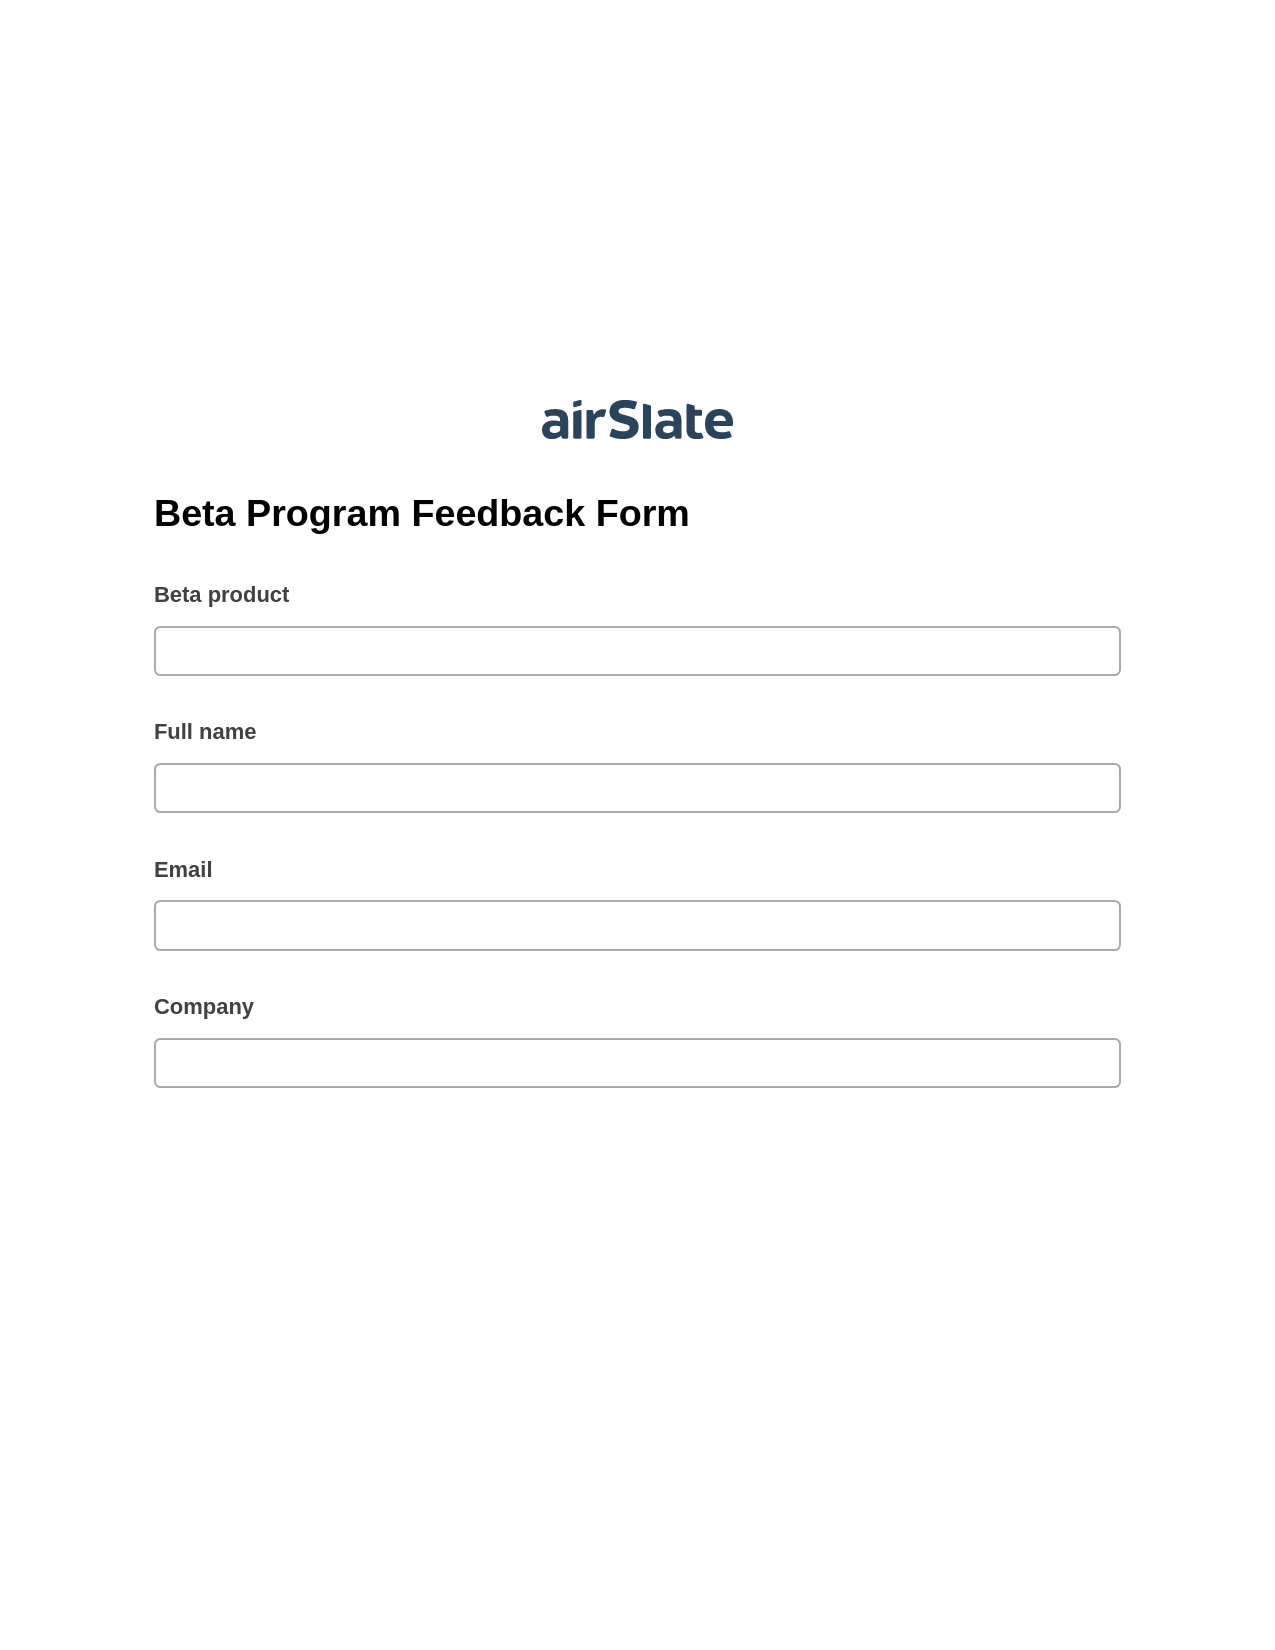 Multirole Beta Program Feedback Form Pre-fill from CSV File Bot, Create Slate Reminder Bot, Webhook Postfinish Bot